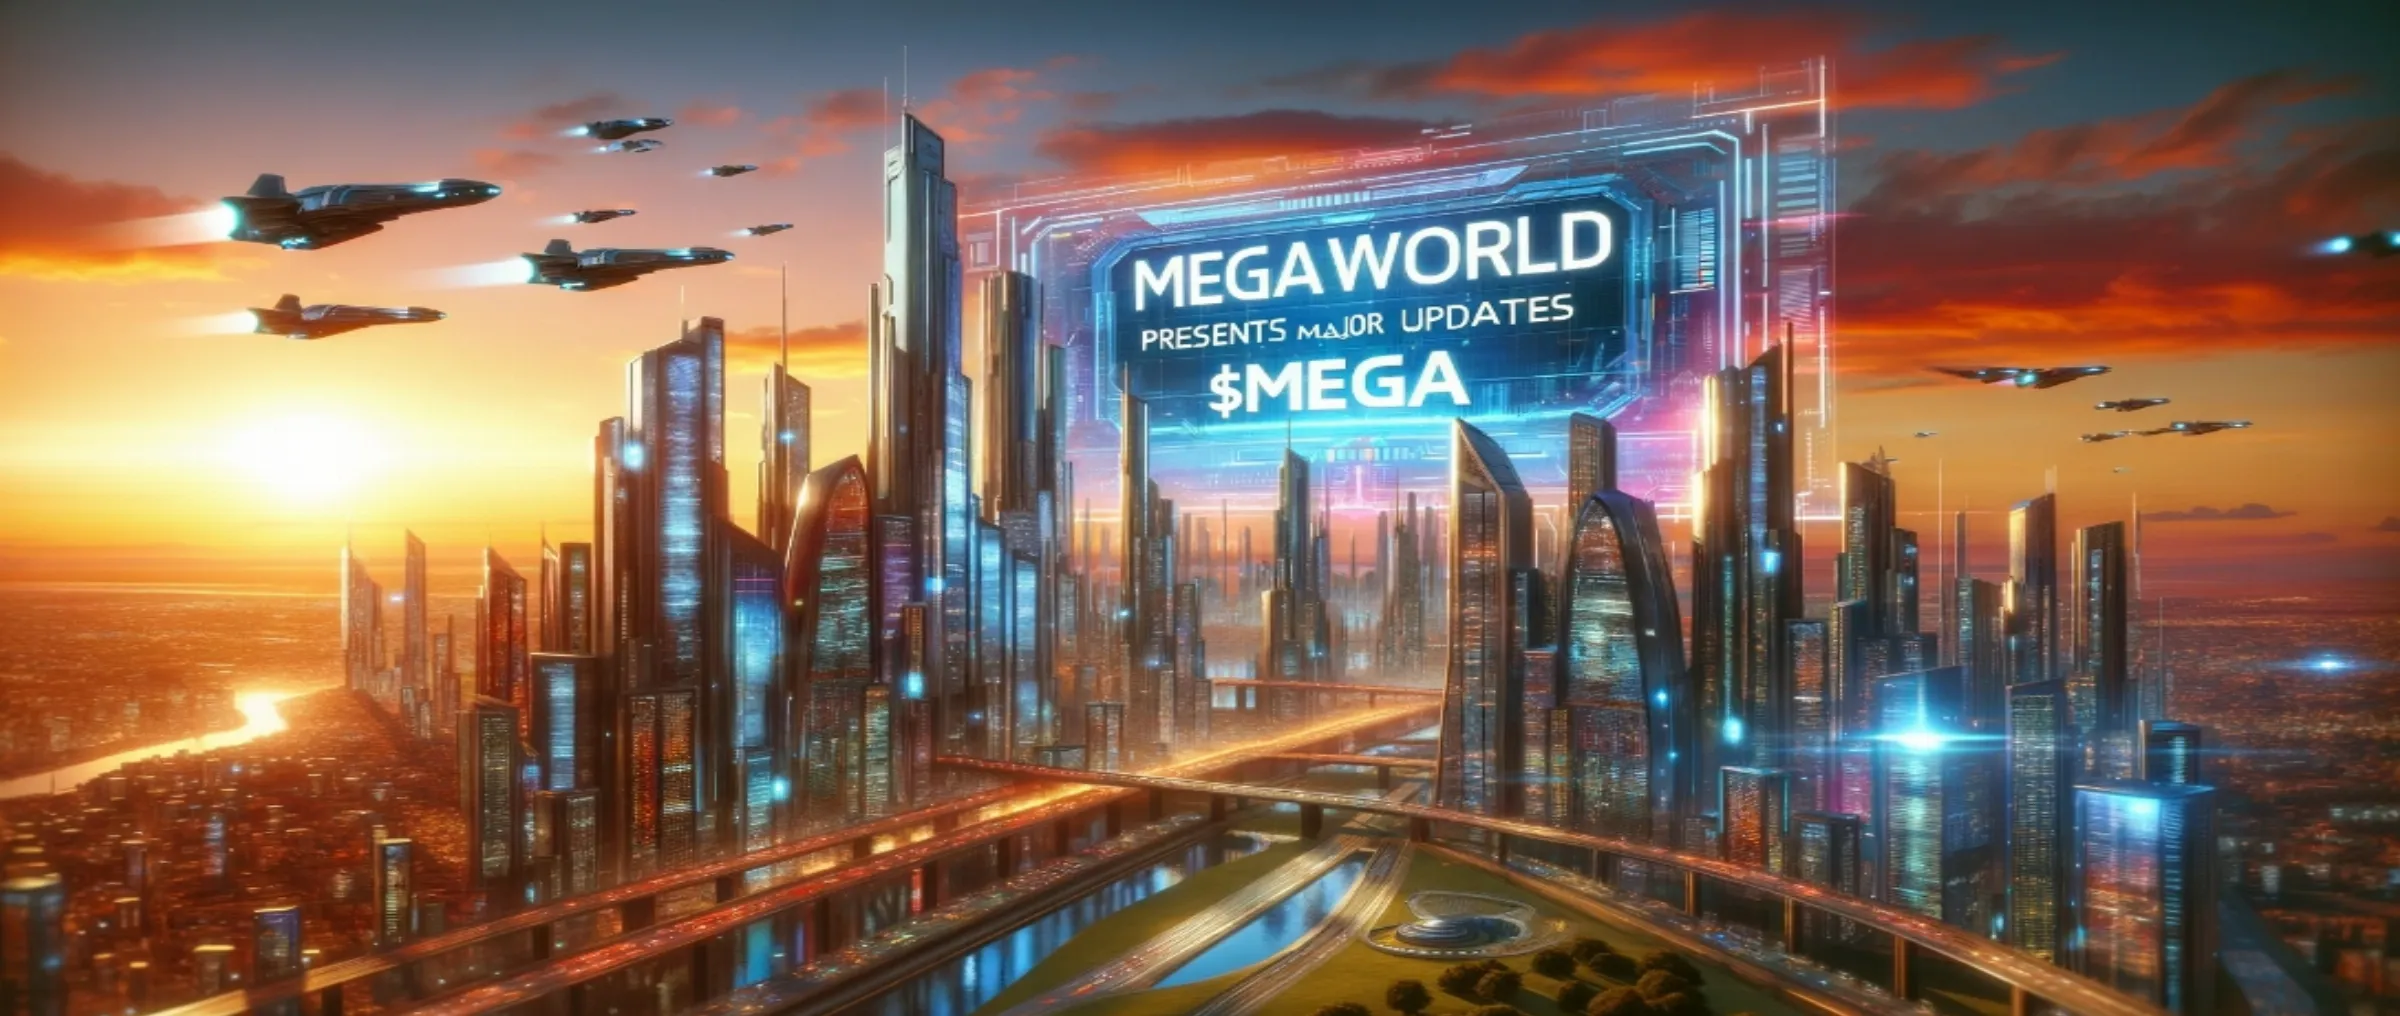 MegaWorld Introduces Important $MEGA Updates